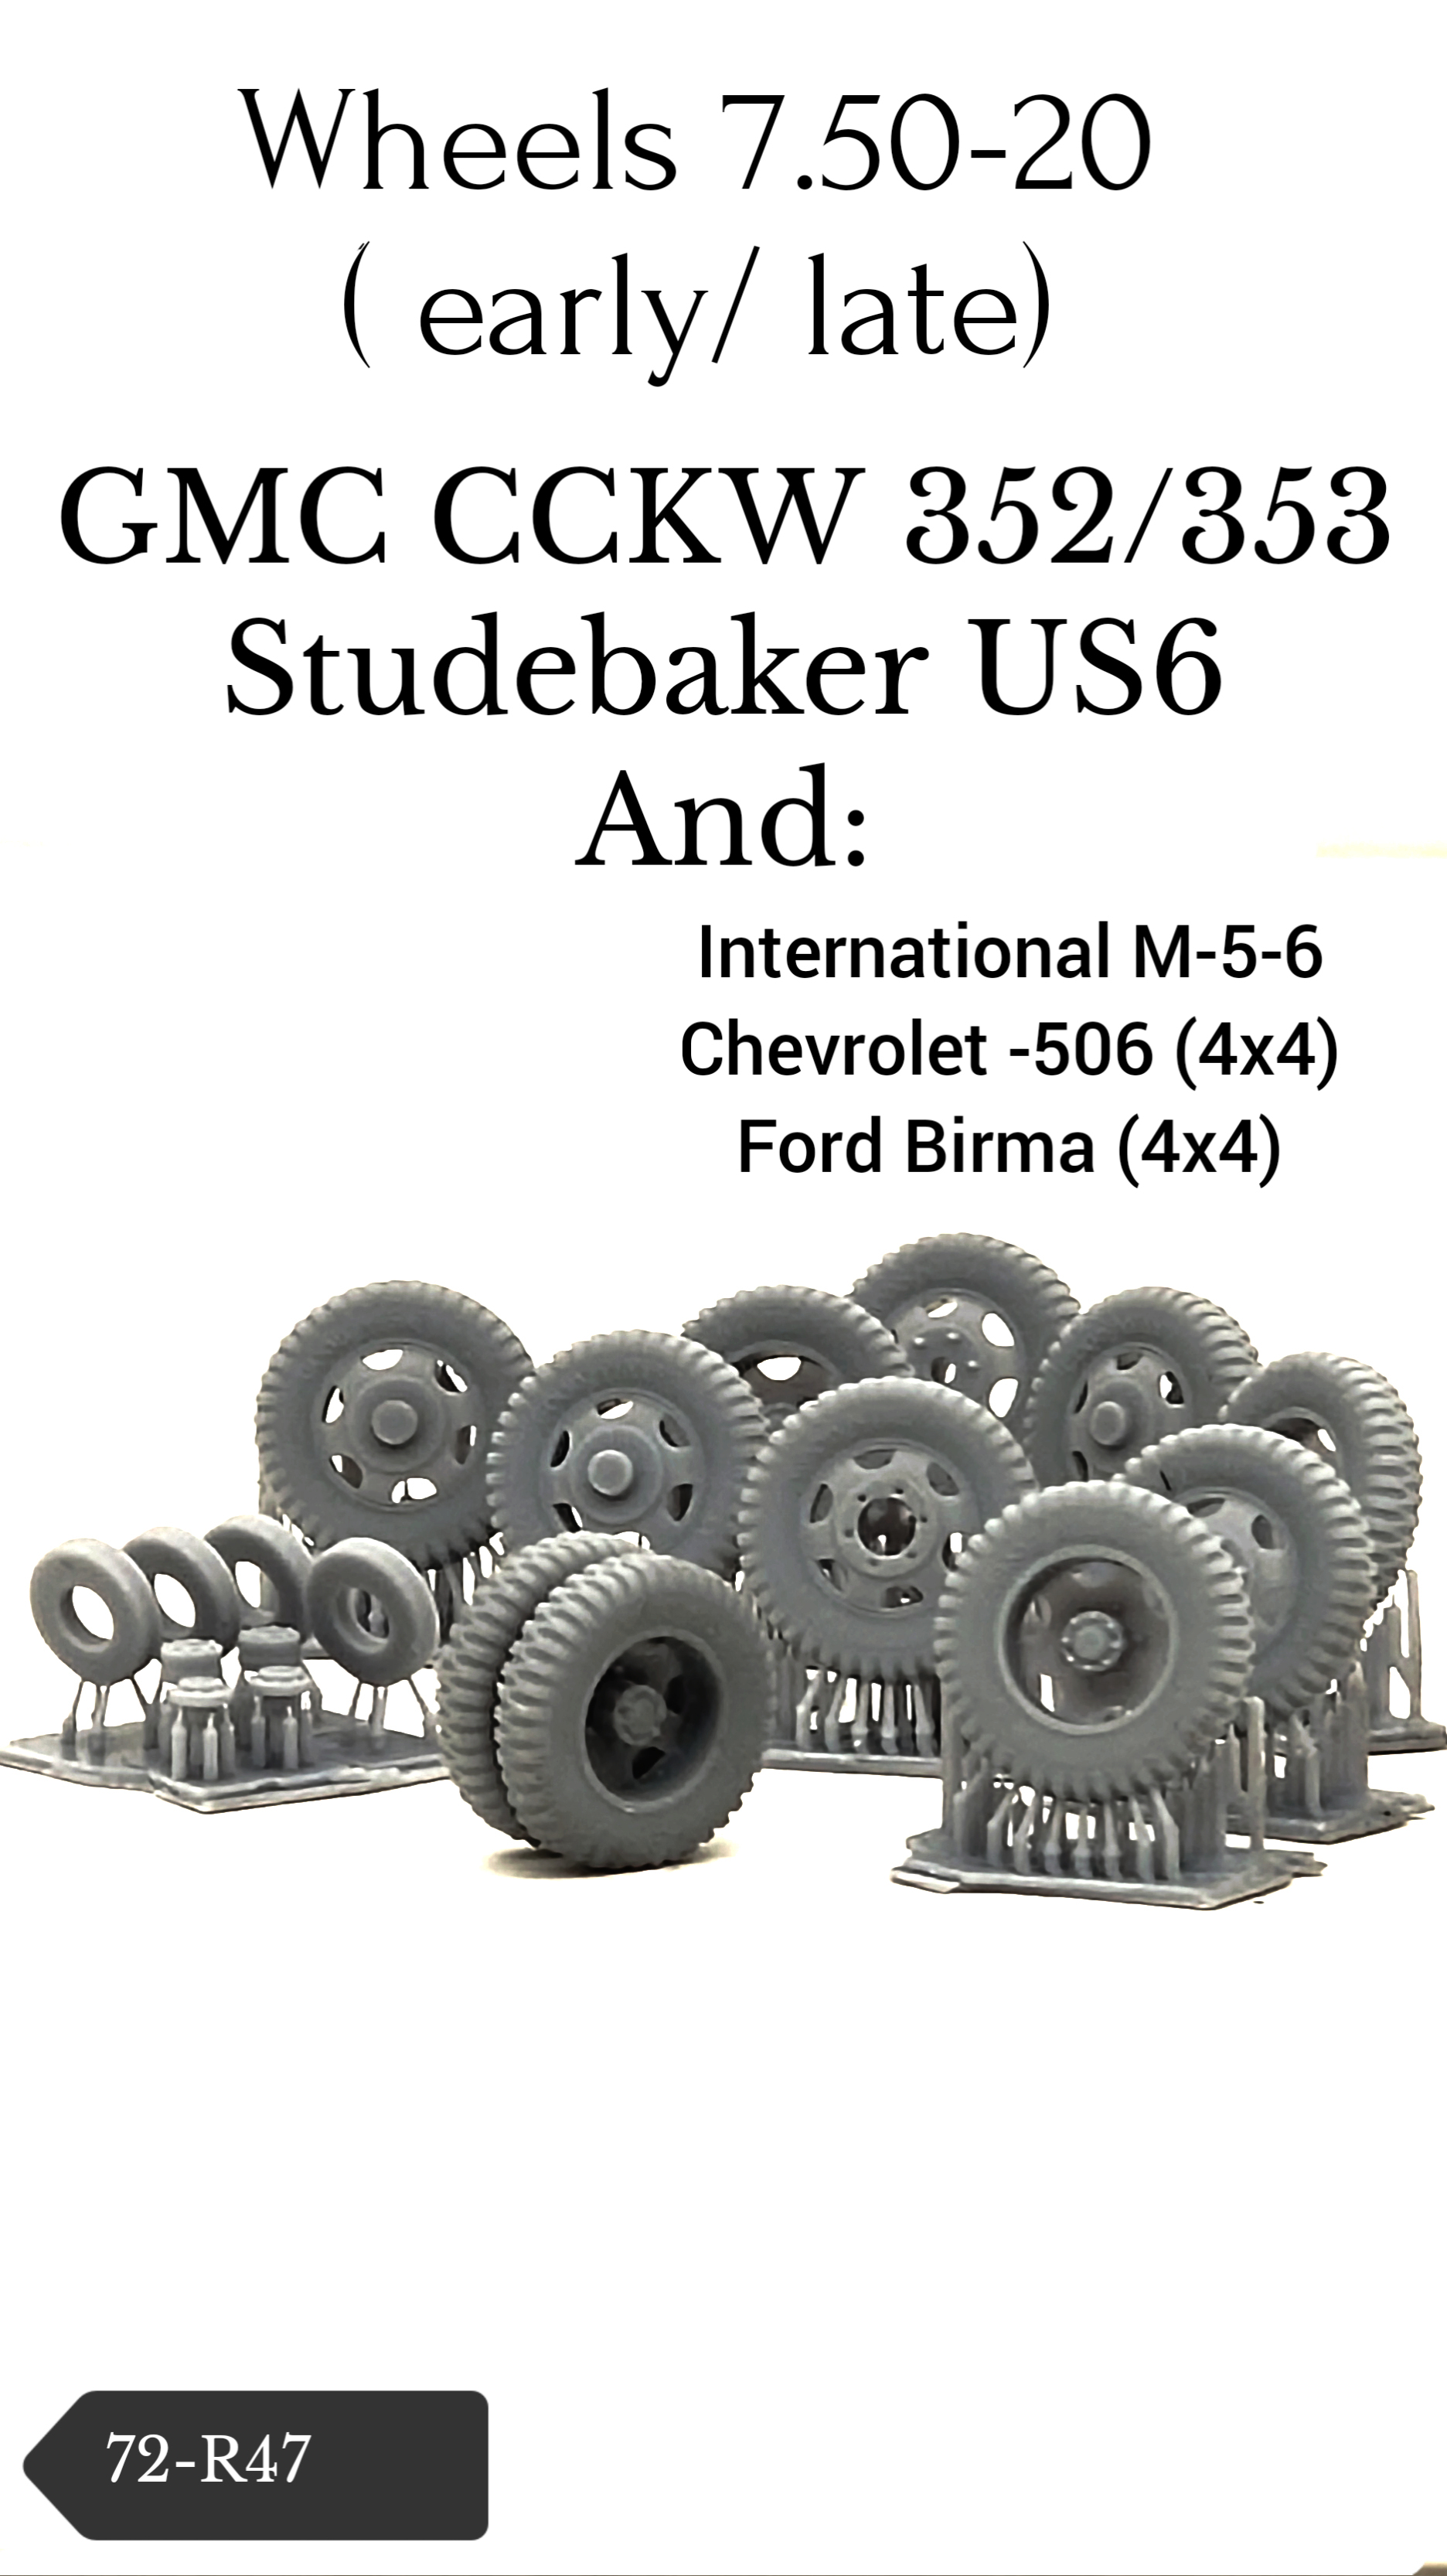 U.S. wheels 7.50-20 GMC/Studebaker/Chevrolet ....